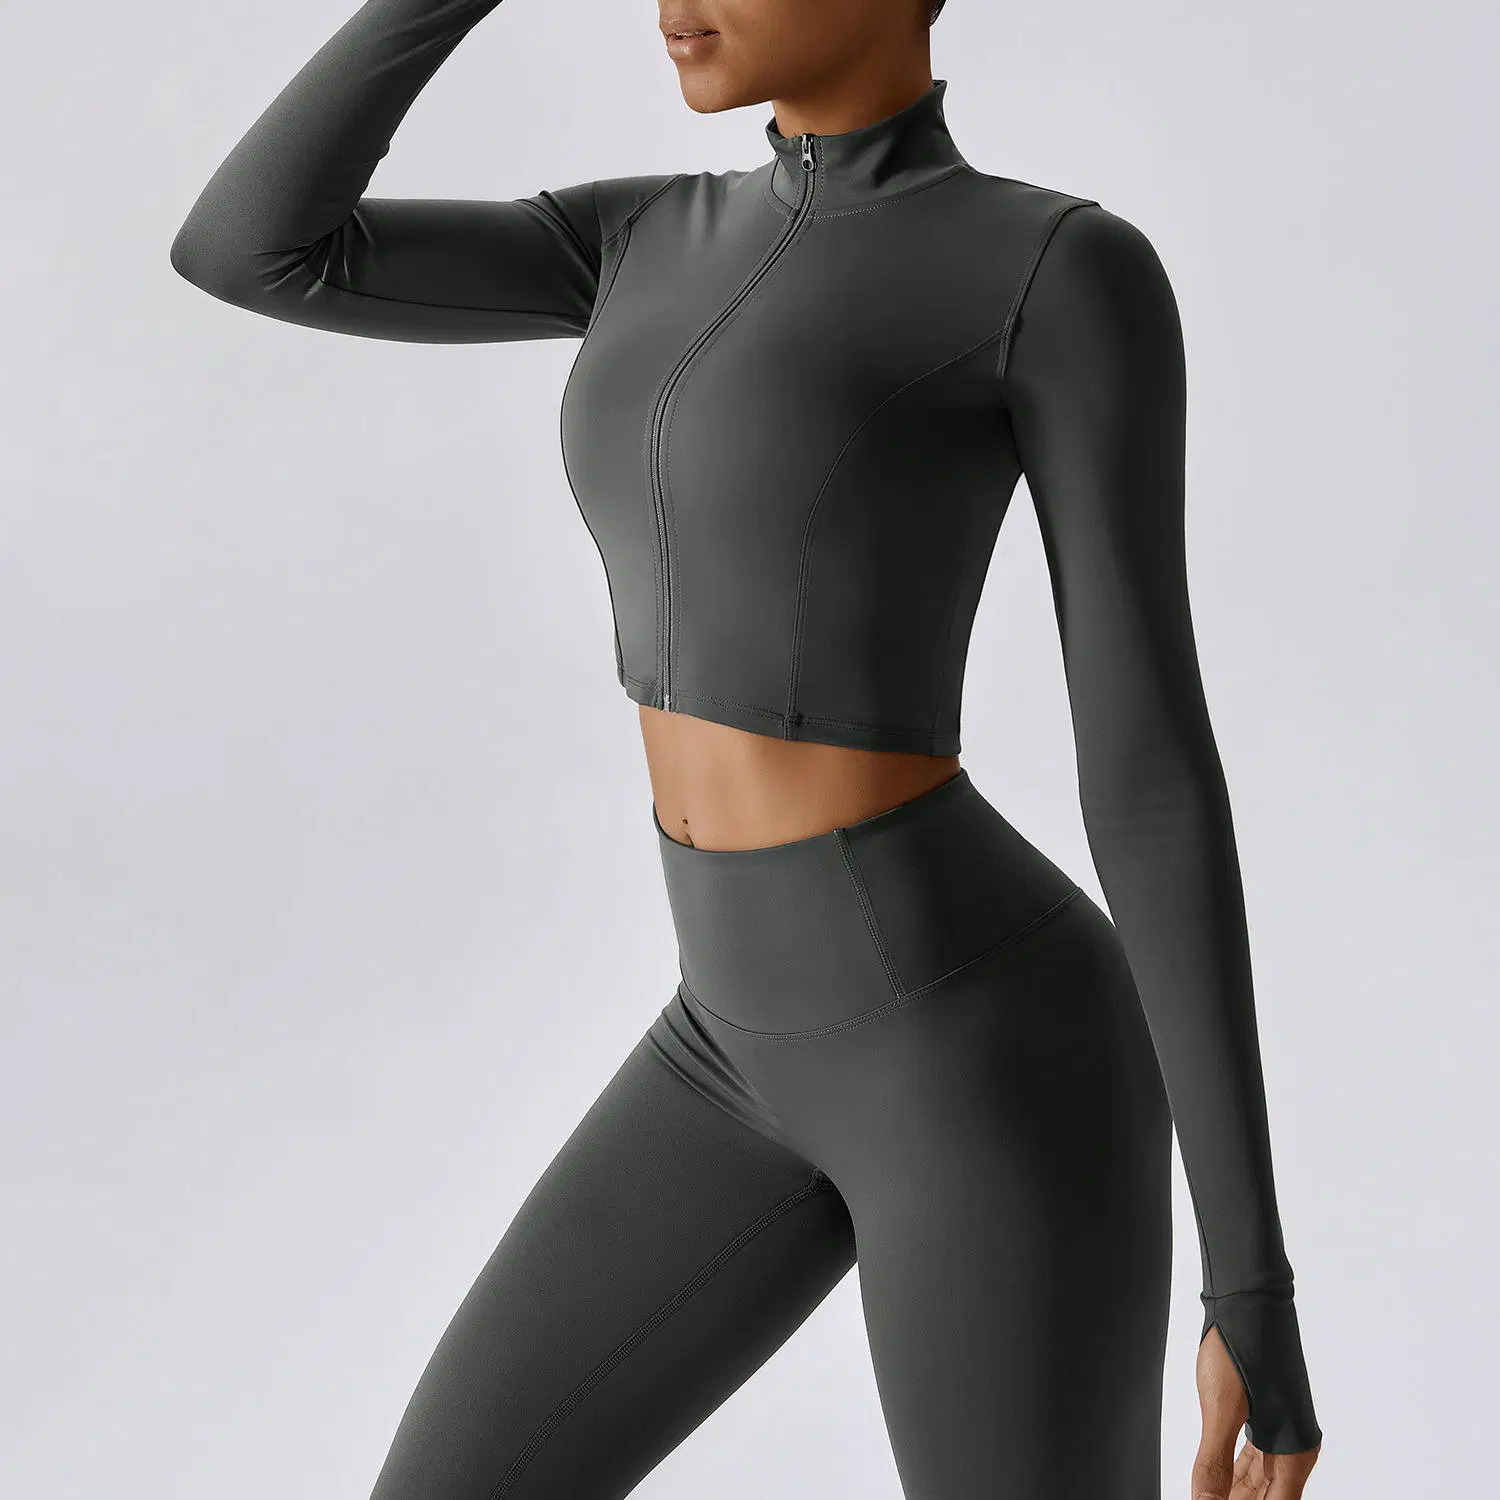 Women Yoga Set Workout Clothes Sports Gym Legging Seamless Fitness Zip Long Sleeve Crop Top Yoga Suit Sportswear